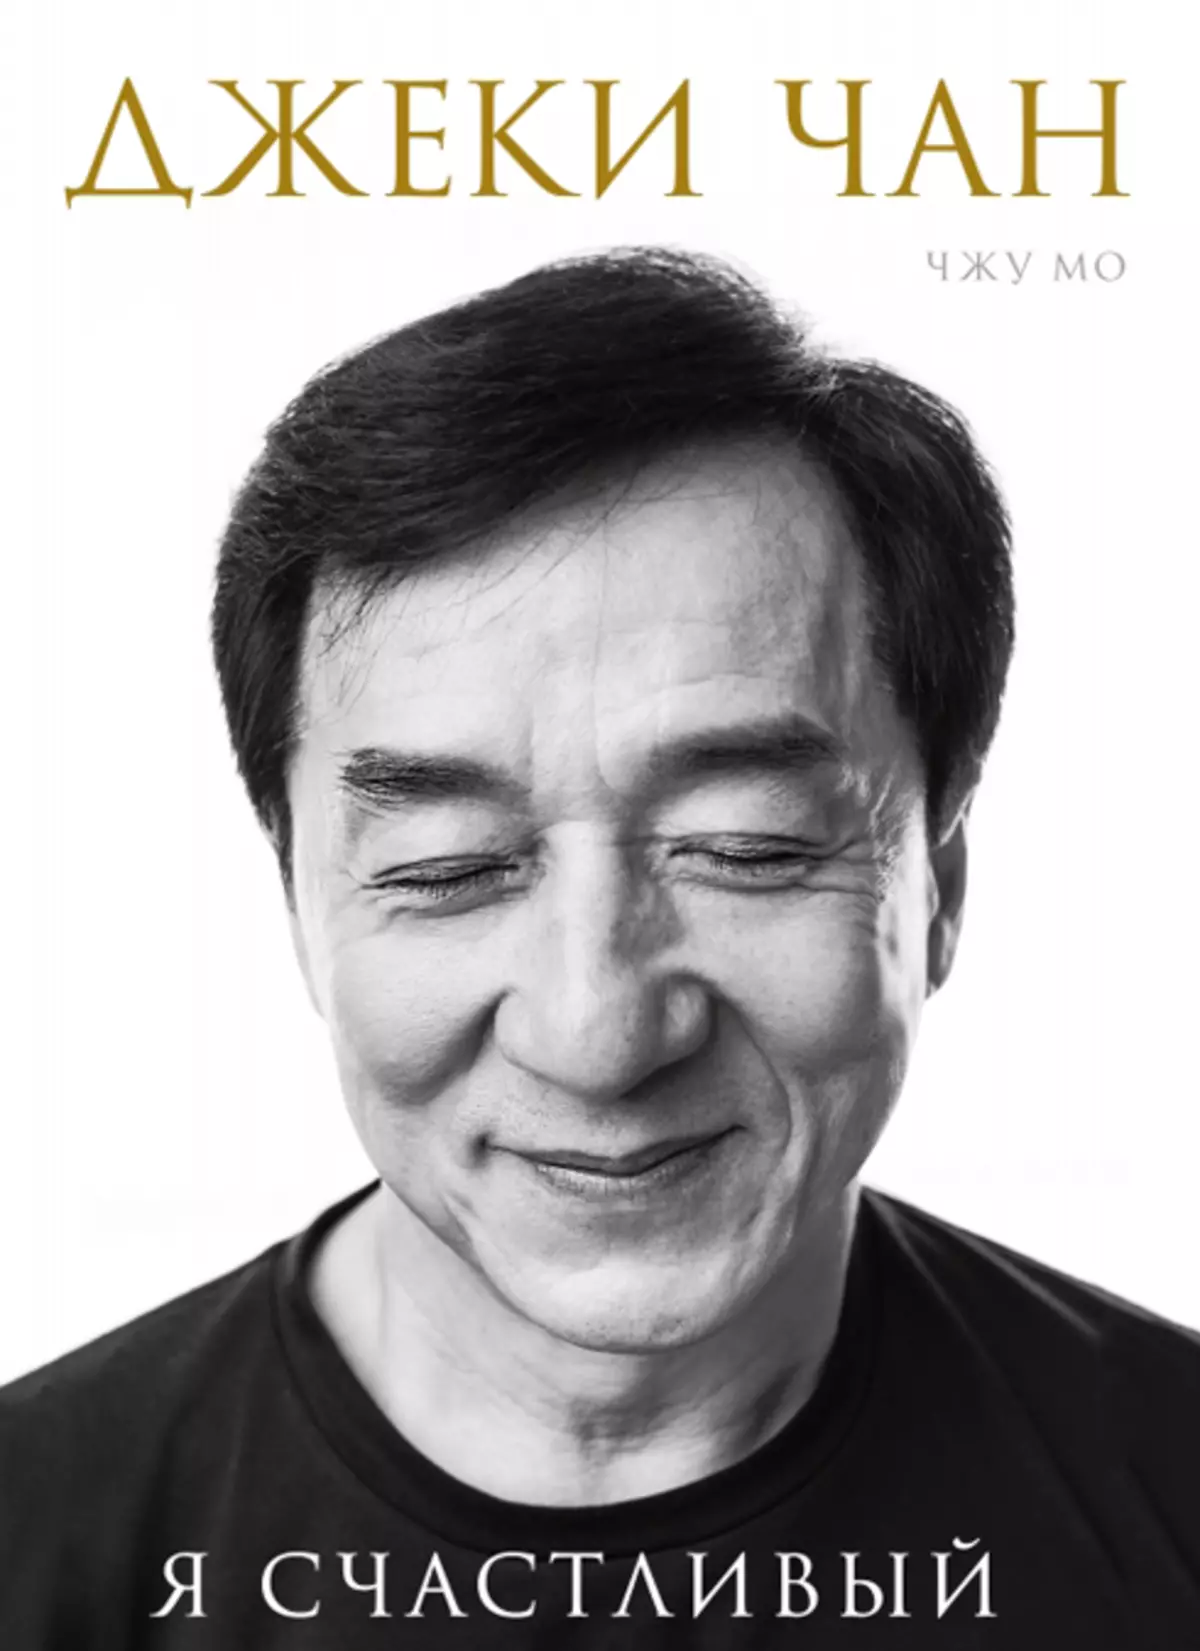 Jackie Chan: 